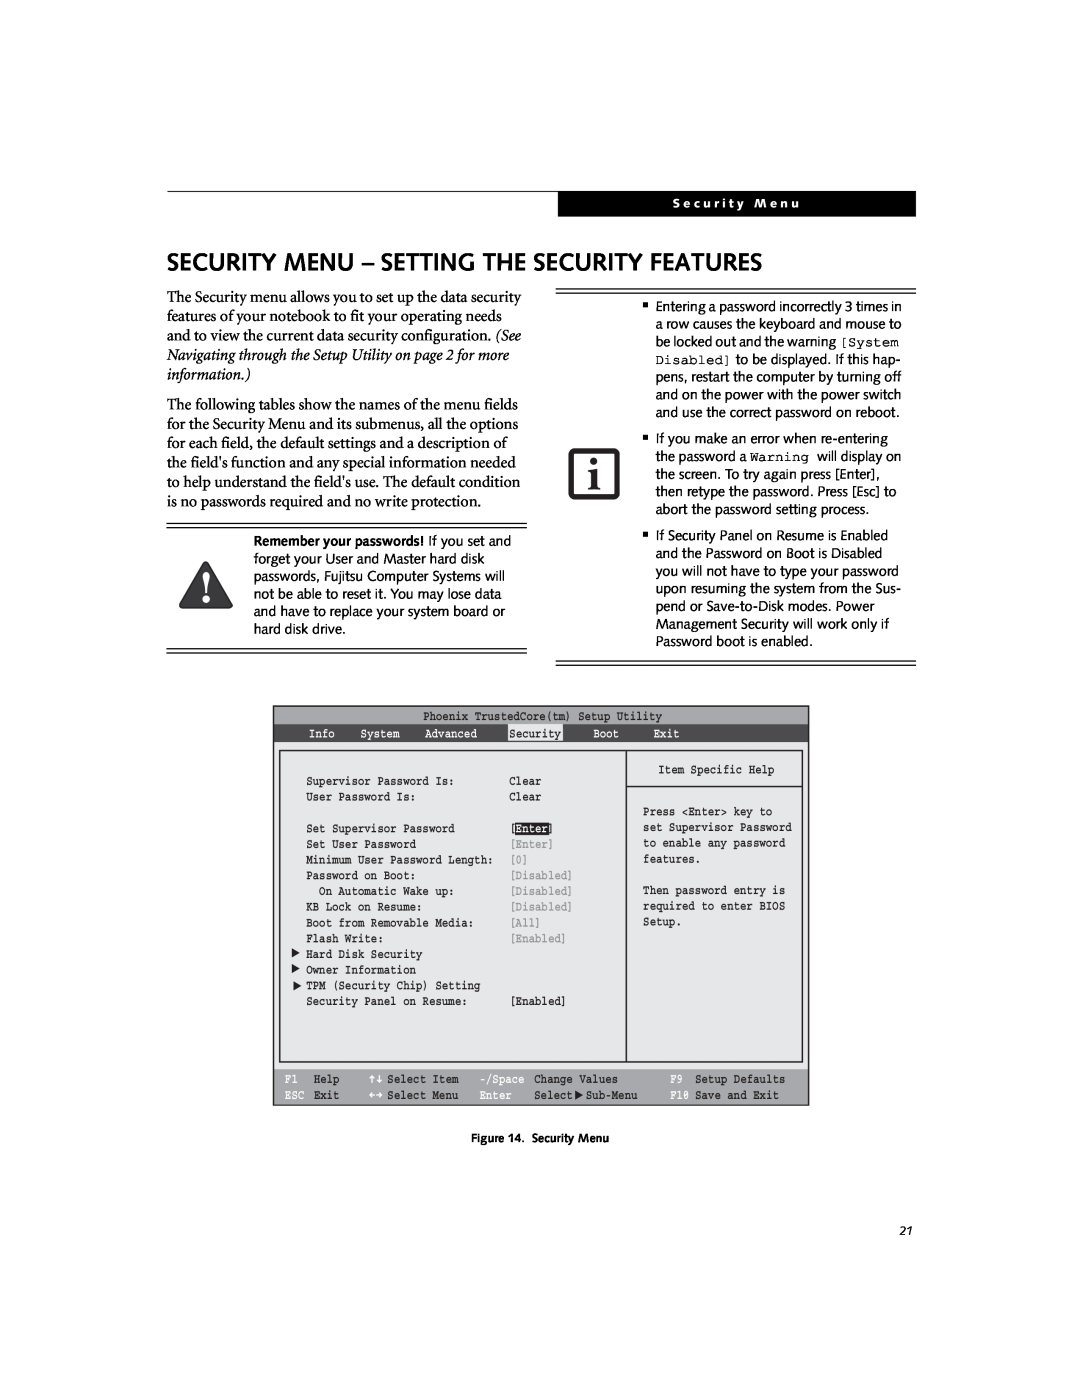 Fujitsu E8410 manual Security Menu - Setting The Security Features, Disabled 